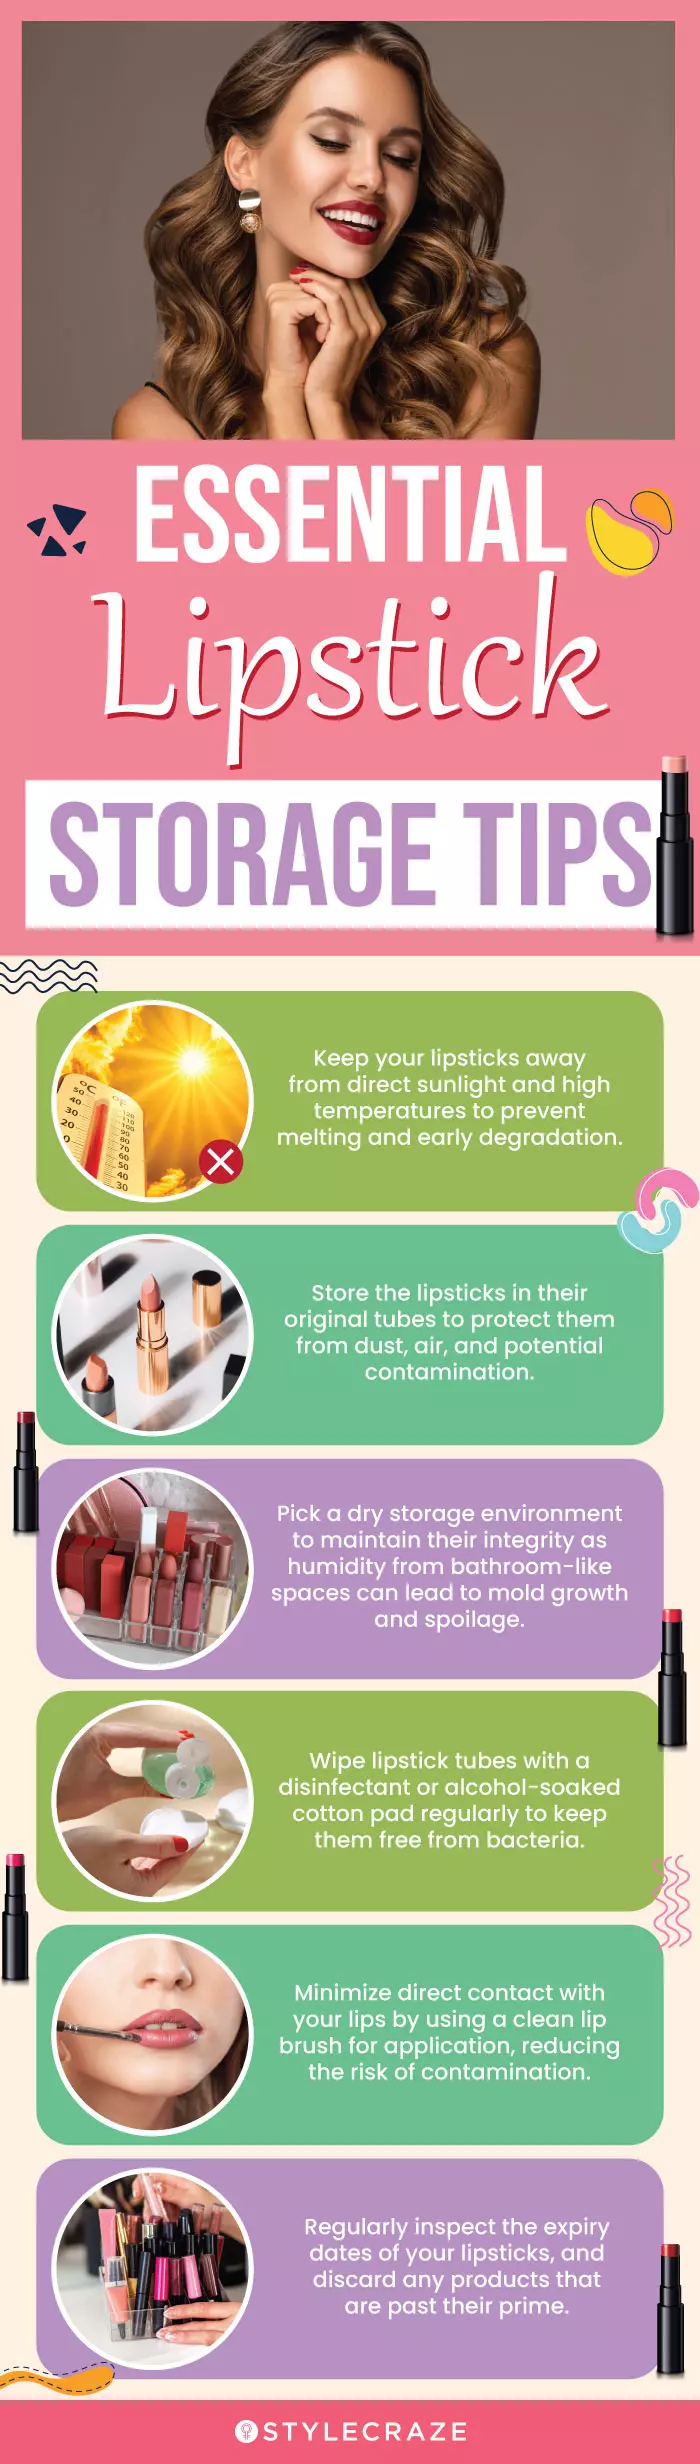 Essential Lipstick Storage Tips (infographic)